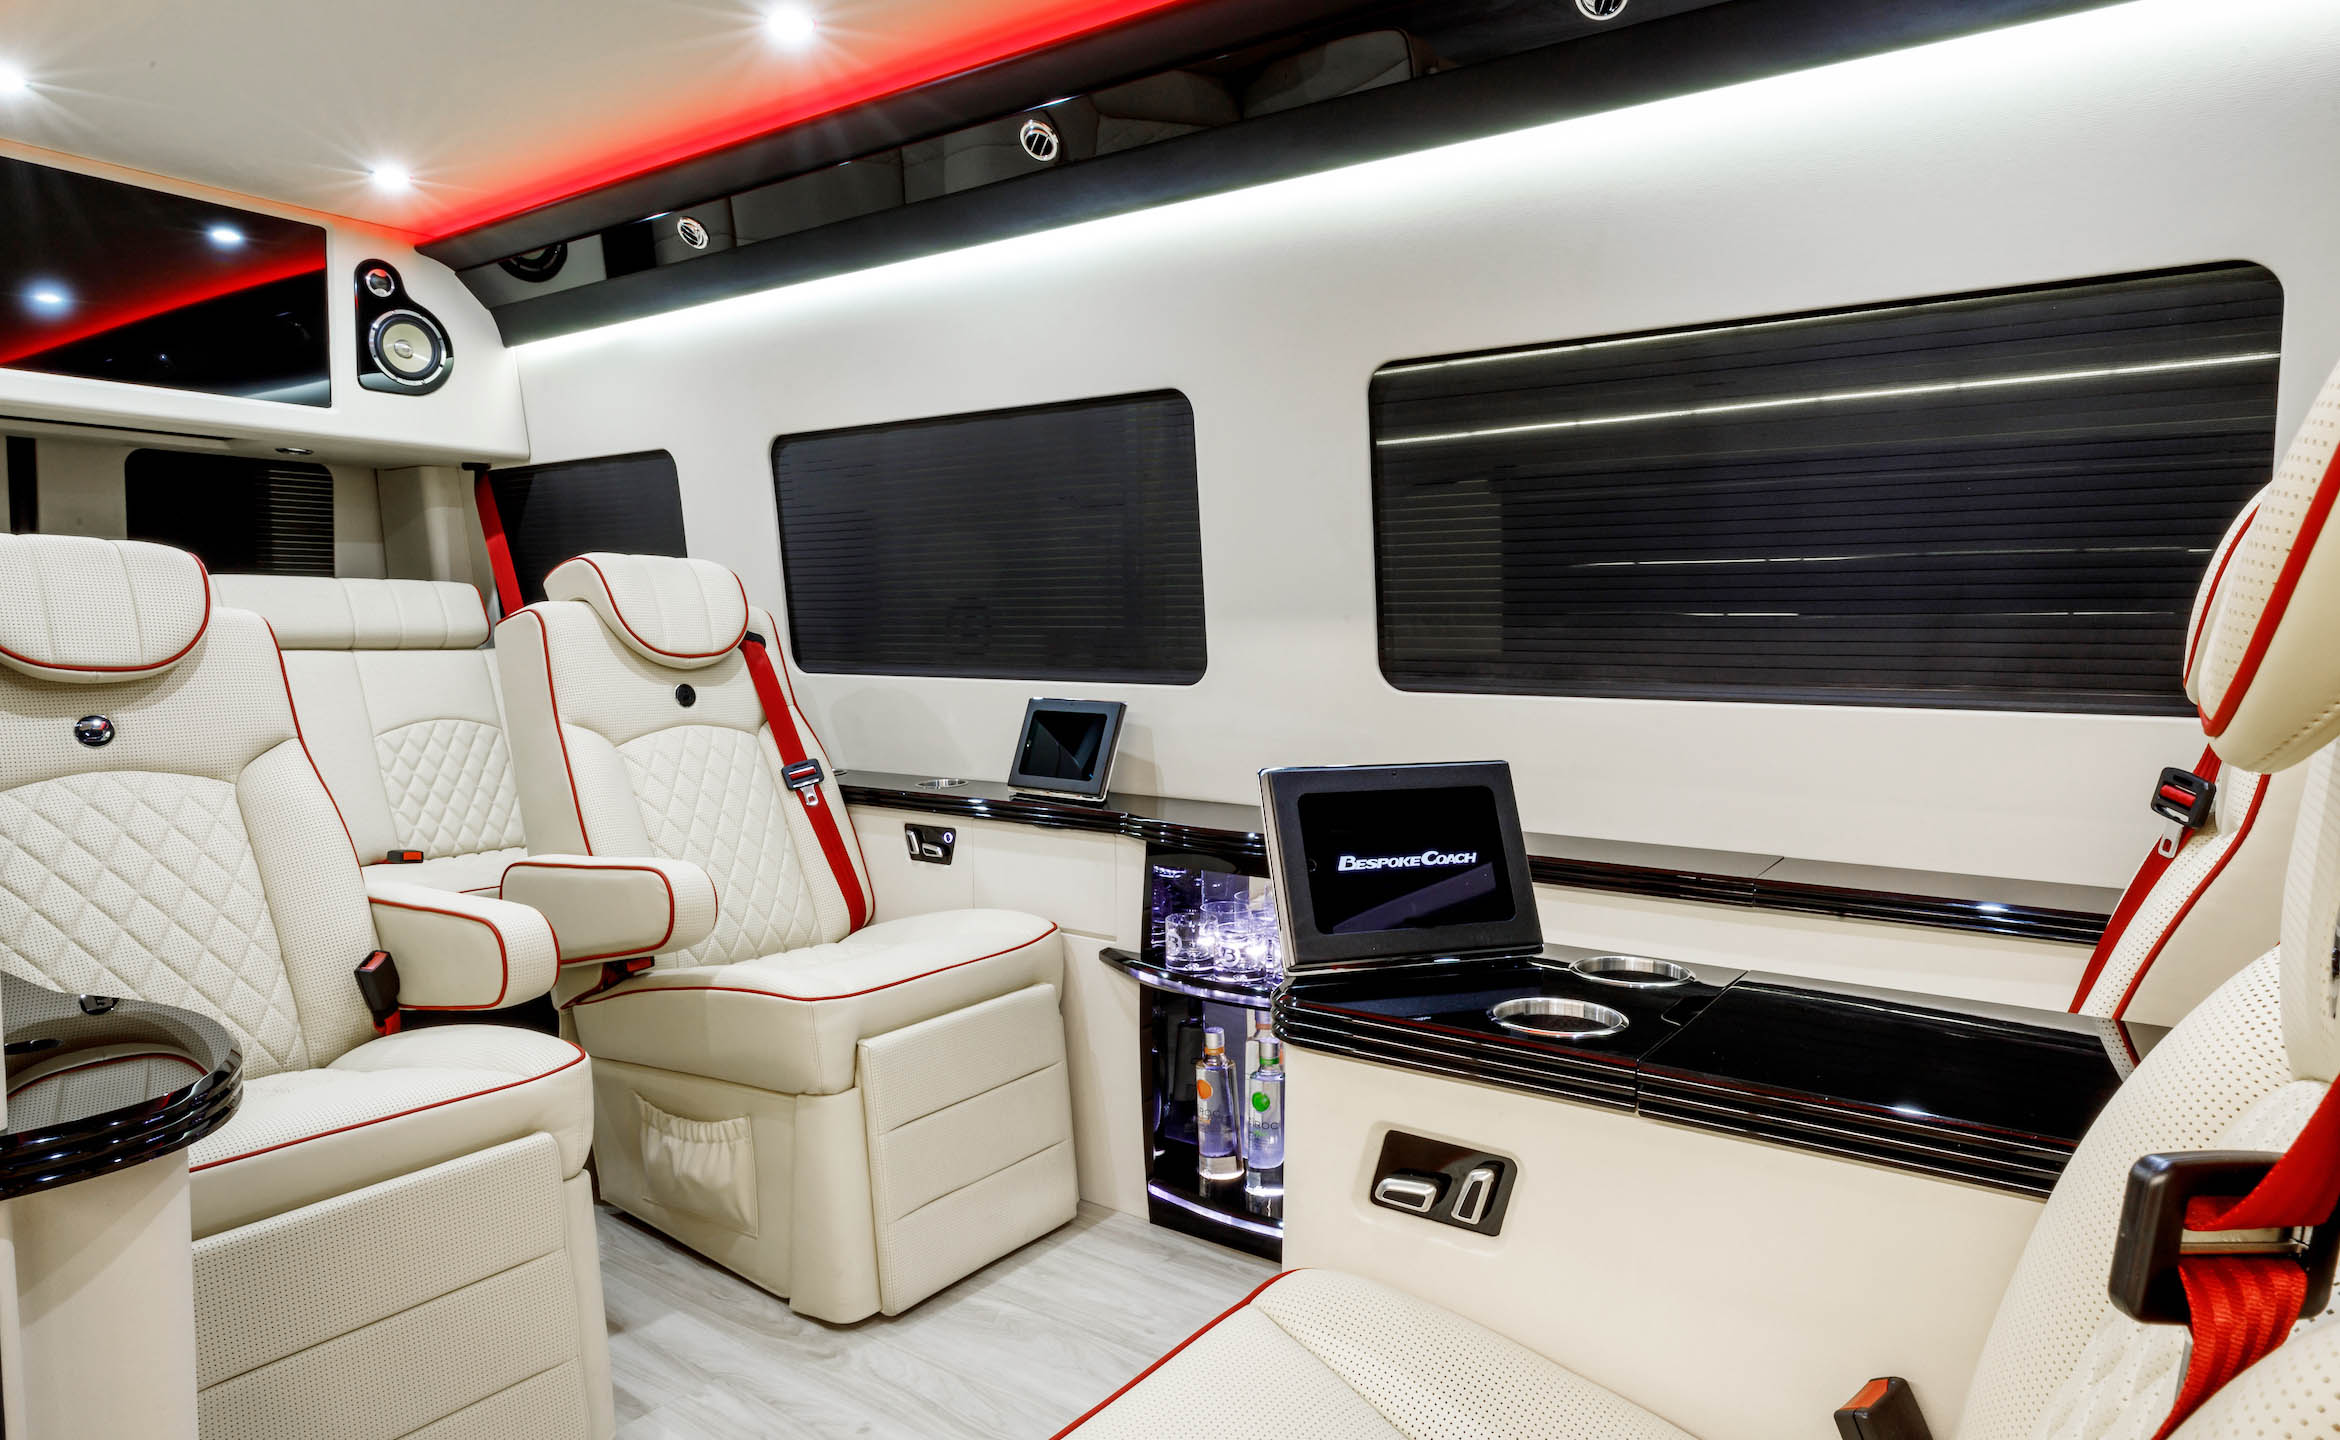 B41 Bespoke Coach Luxury Custom Coaches Sprinter Van Conversions